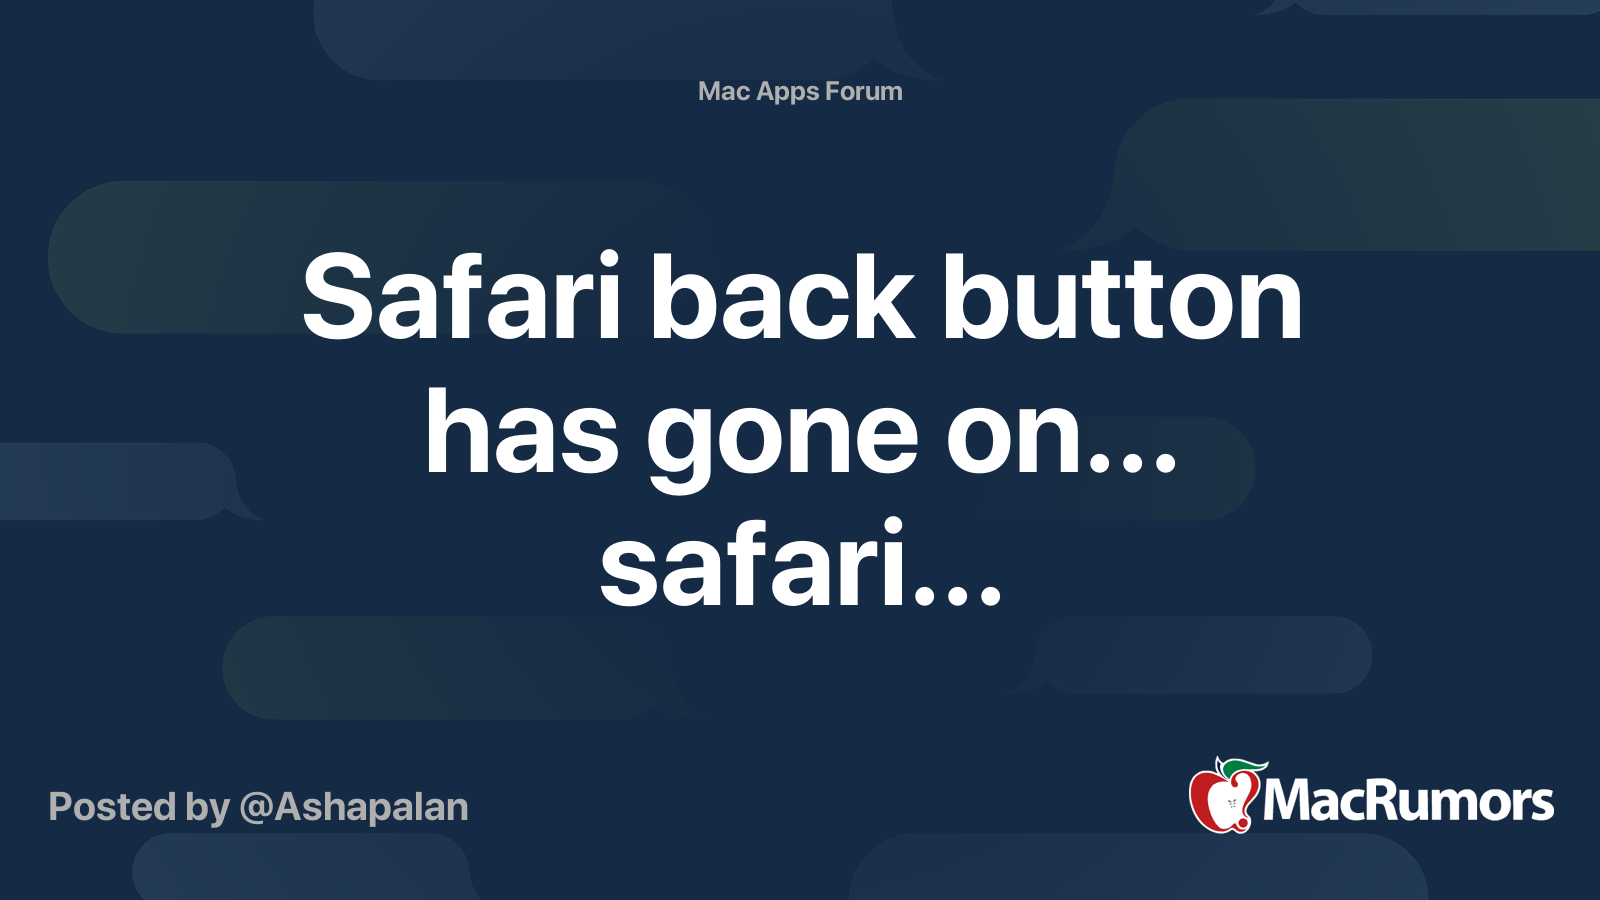 safari browser back button issue